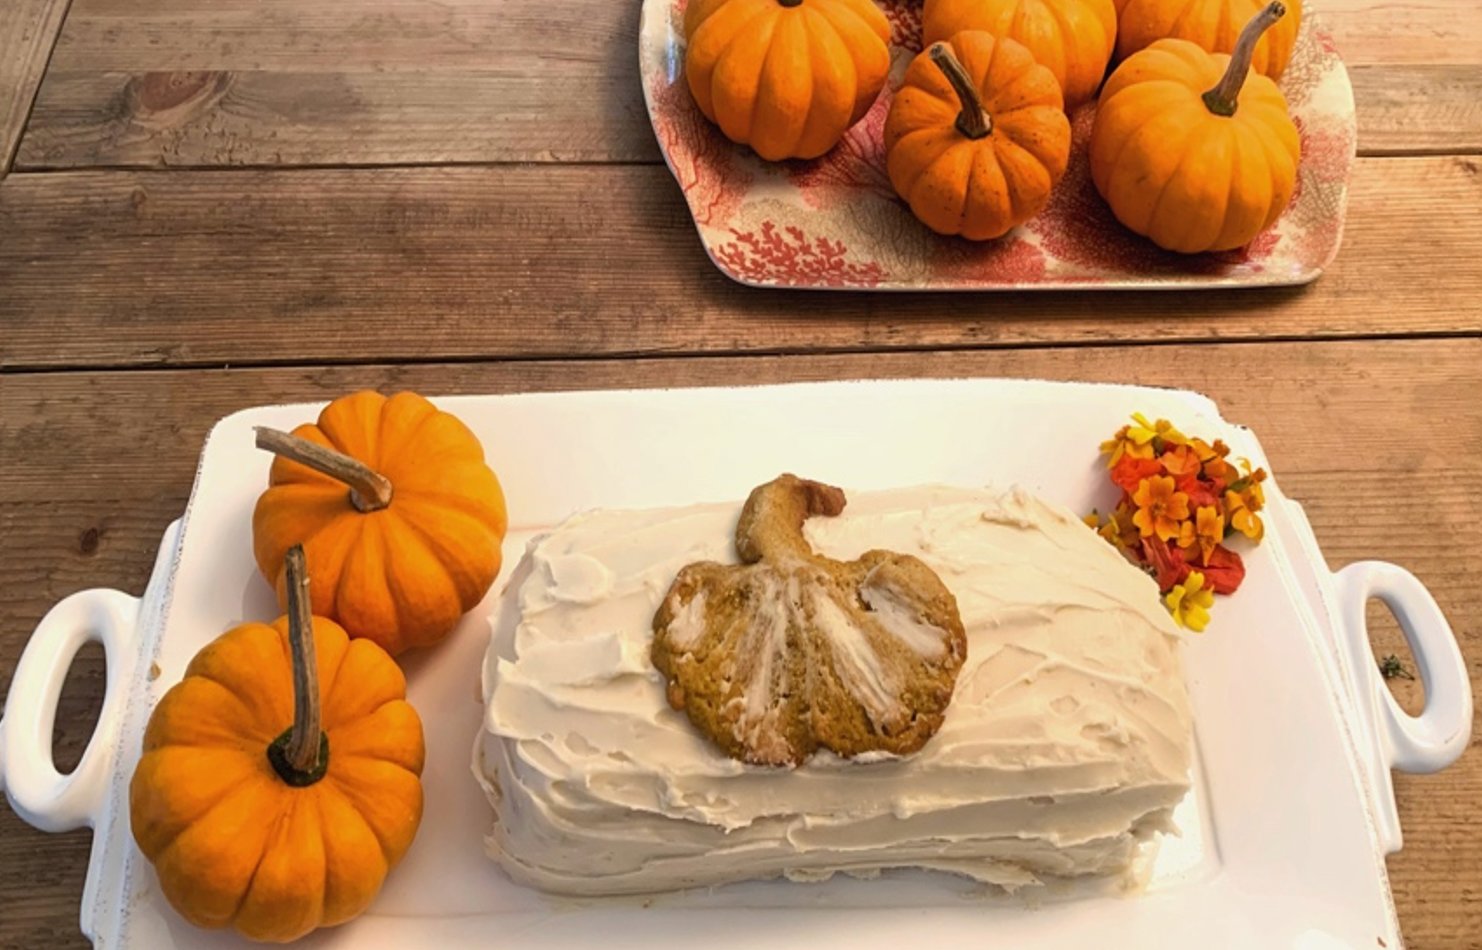 Instead of pumpkin pie, try a pumpkin roll with brown butter frosting for dessert.